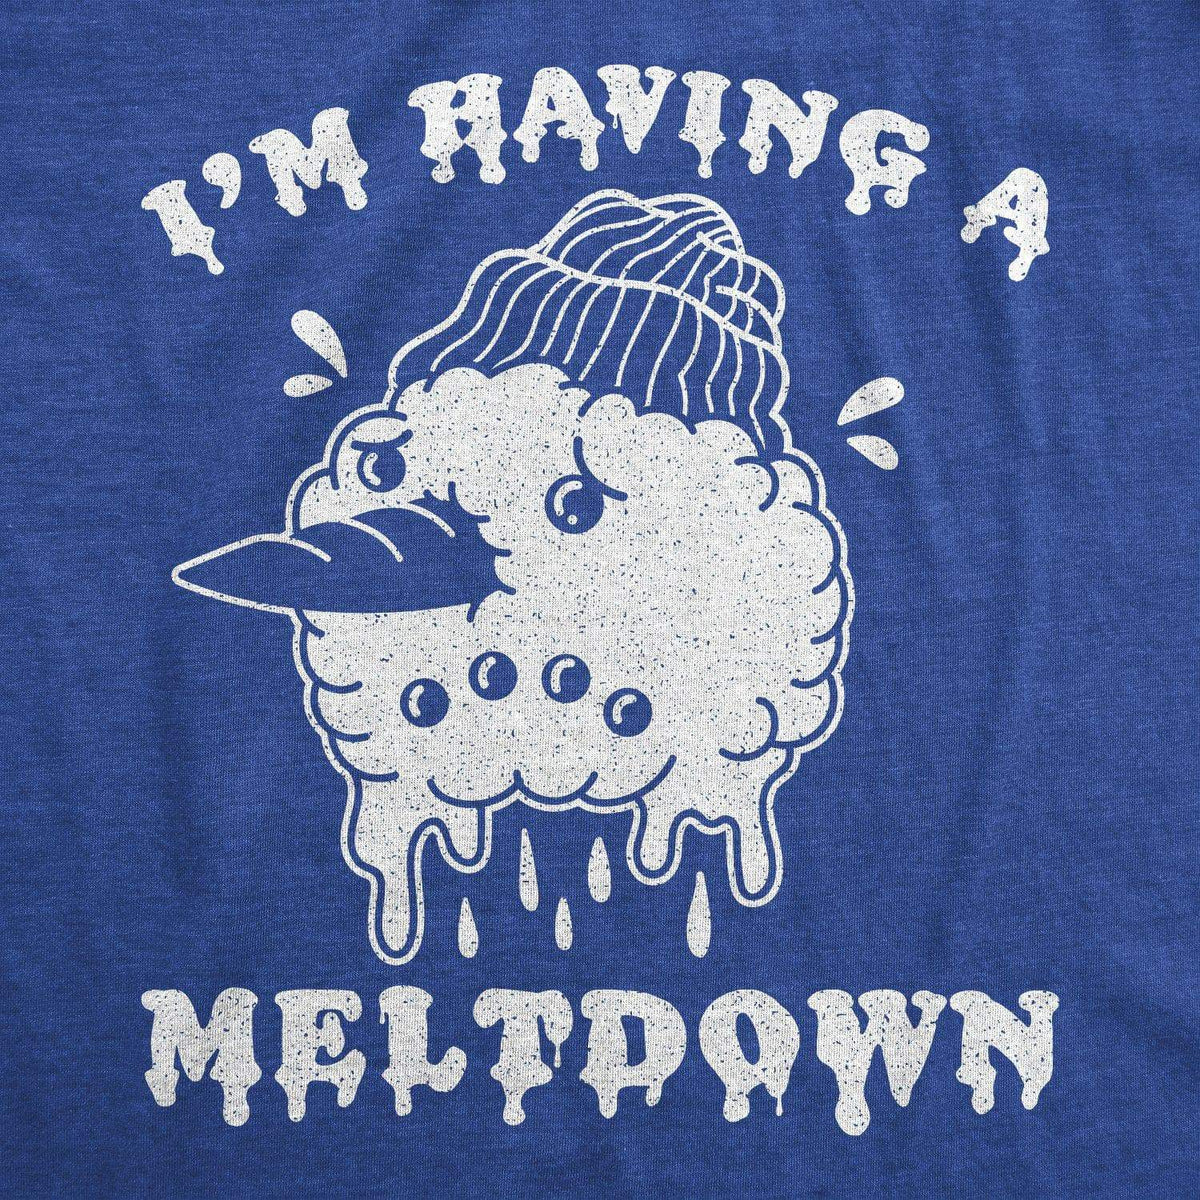 I&#39;m Having A Meltdown Men&#39;s Tshirt - Crazy Dog T-Shirts